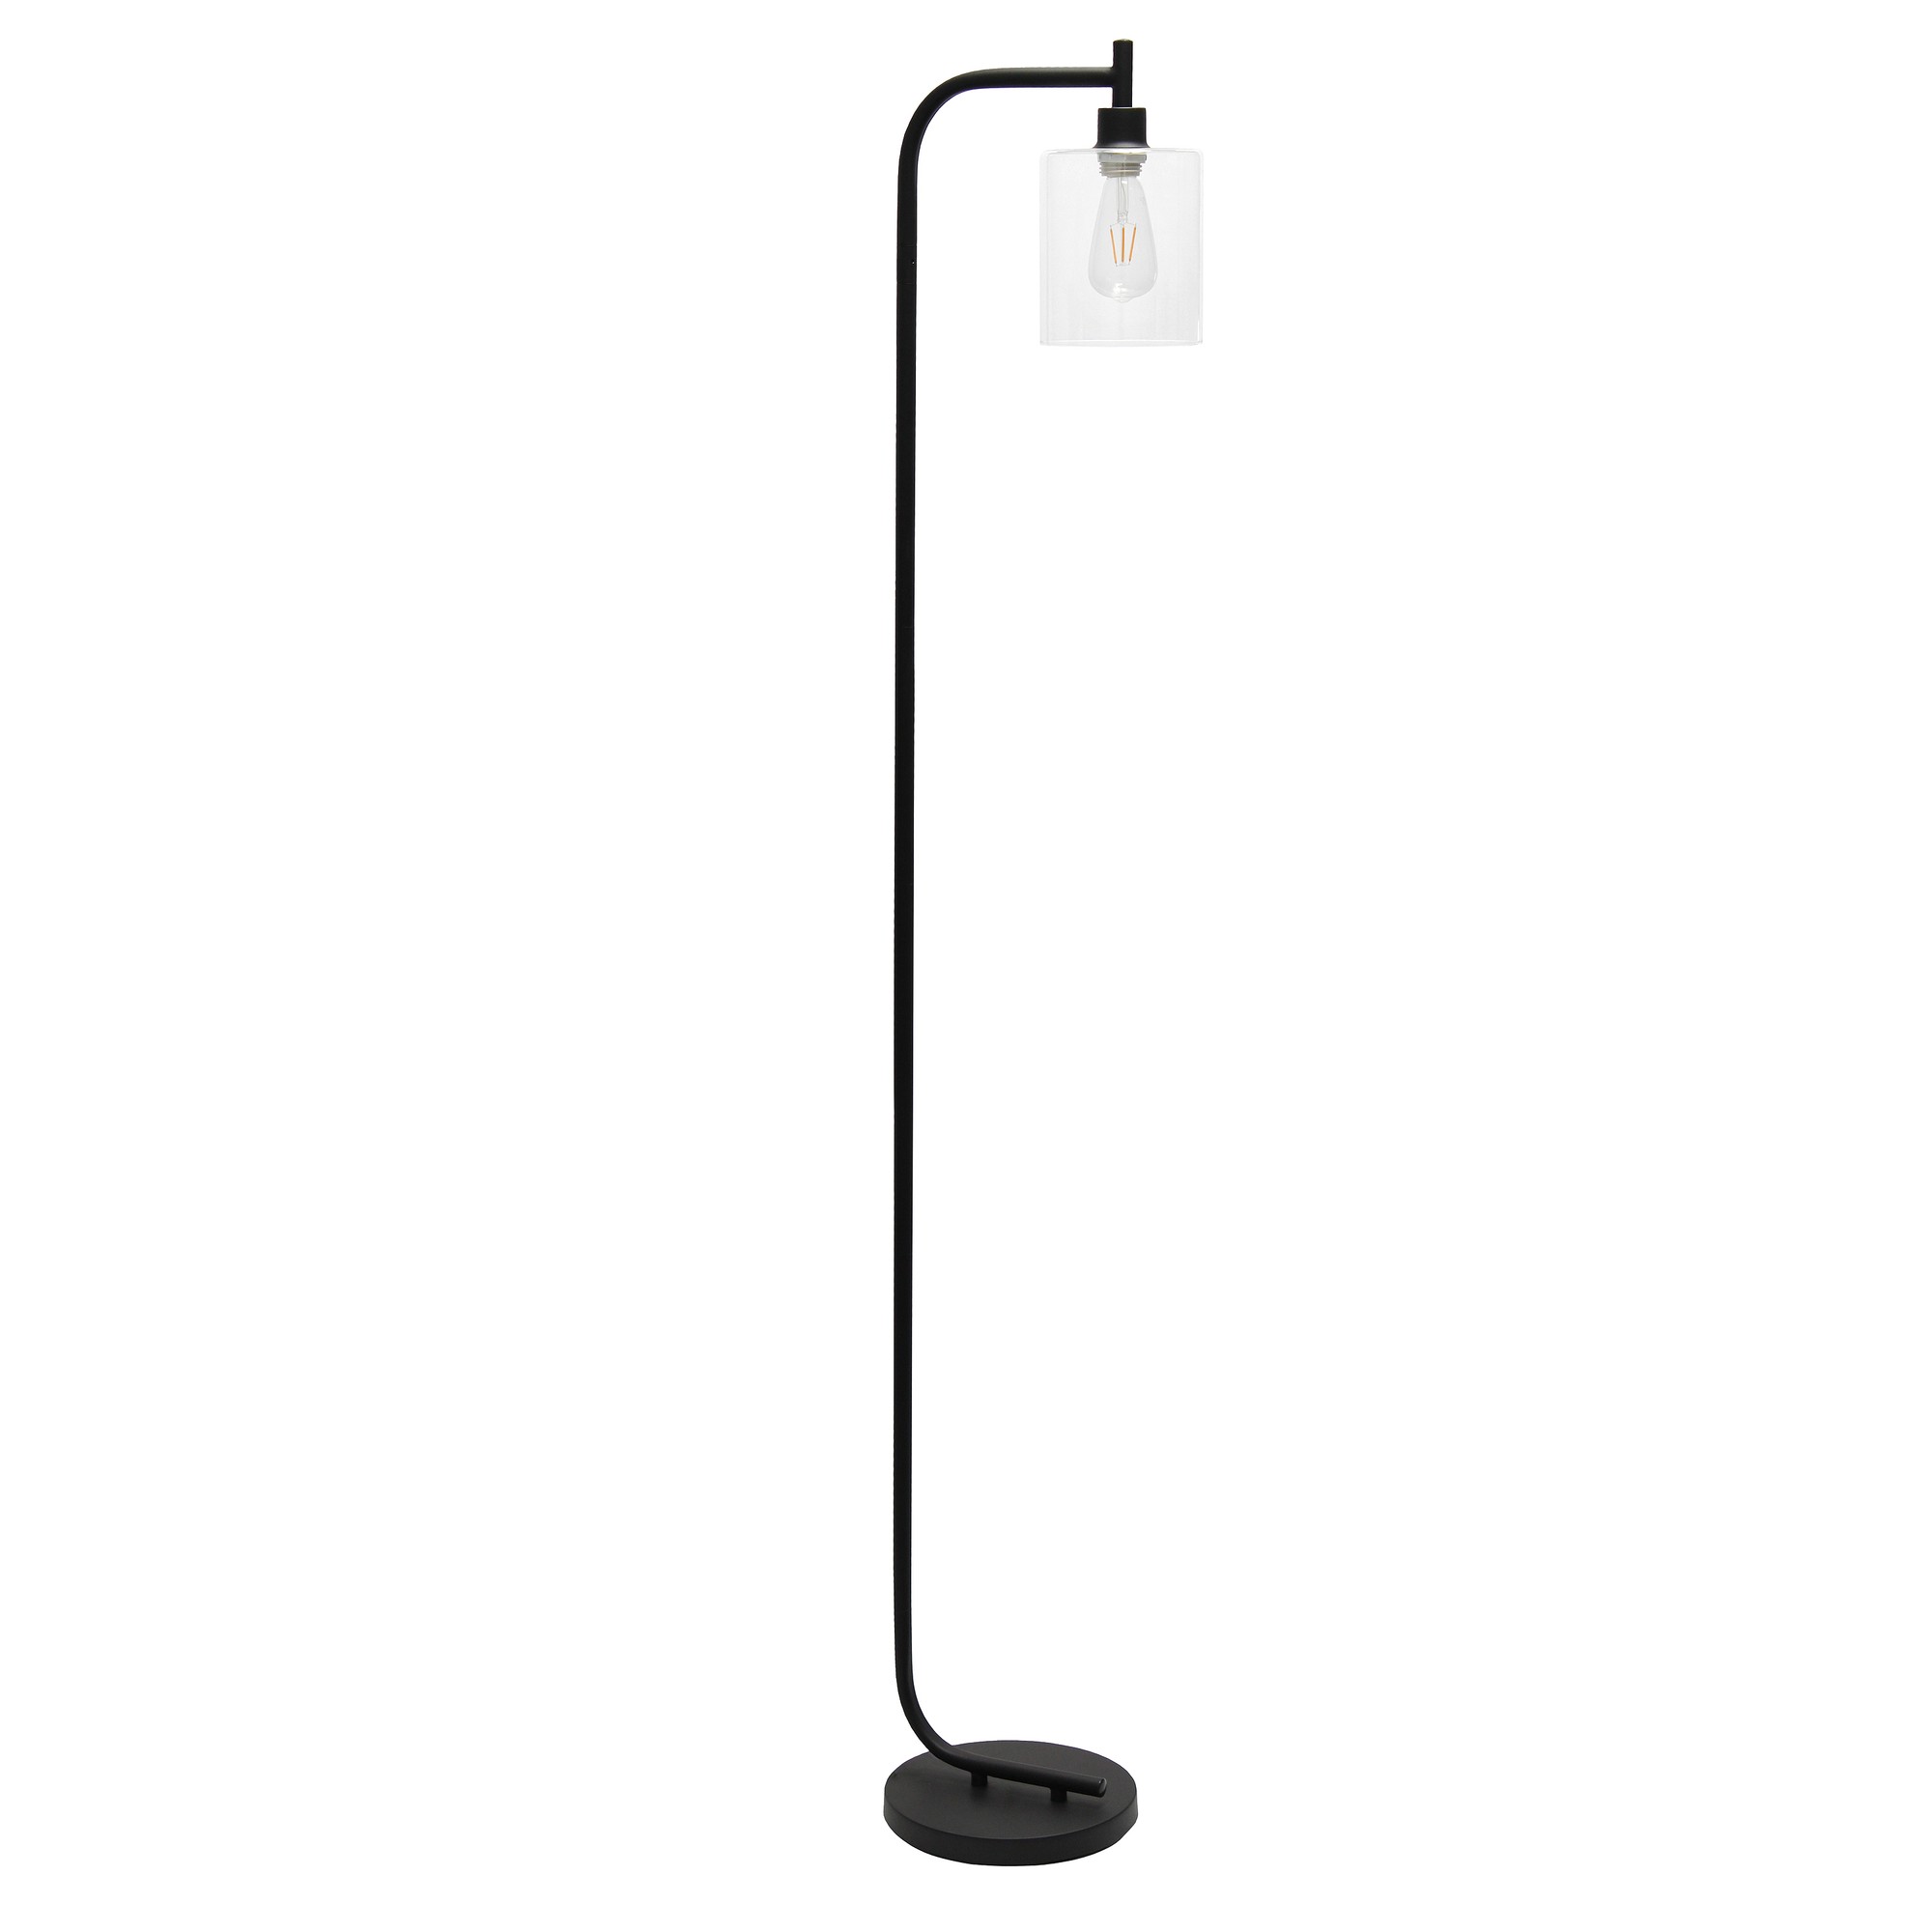 Simple Designs Modern Iron Lantern Floor Lamp with Glass Shade, Black